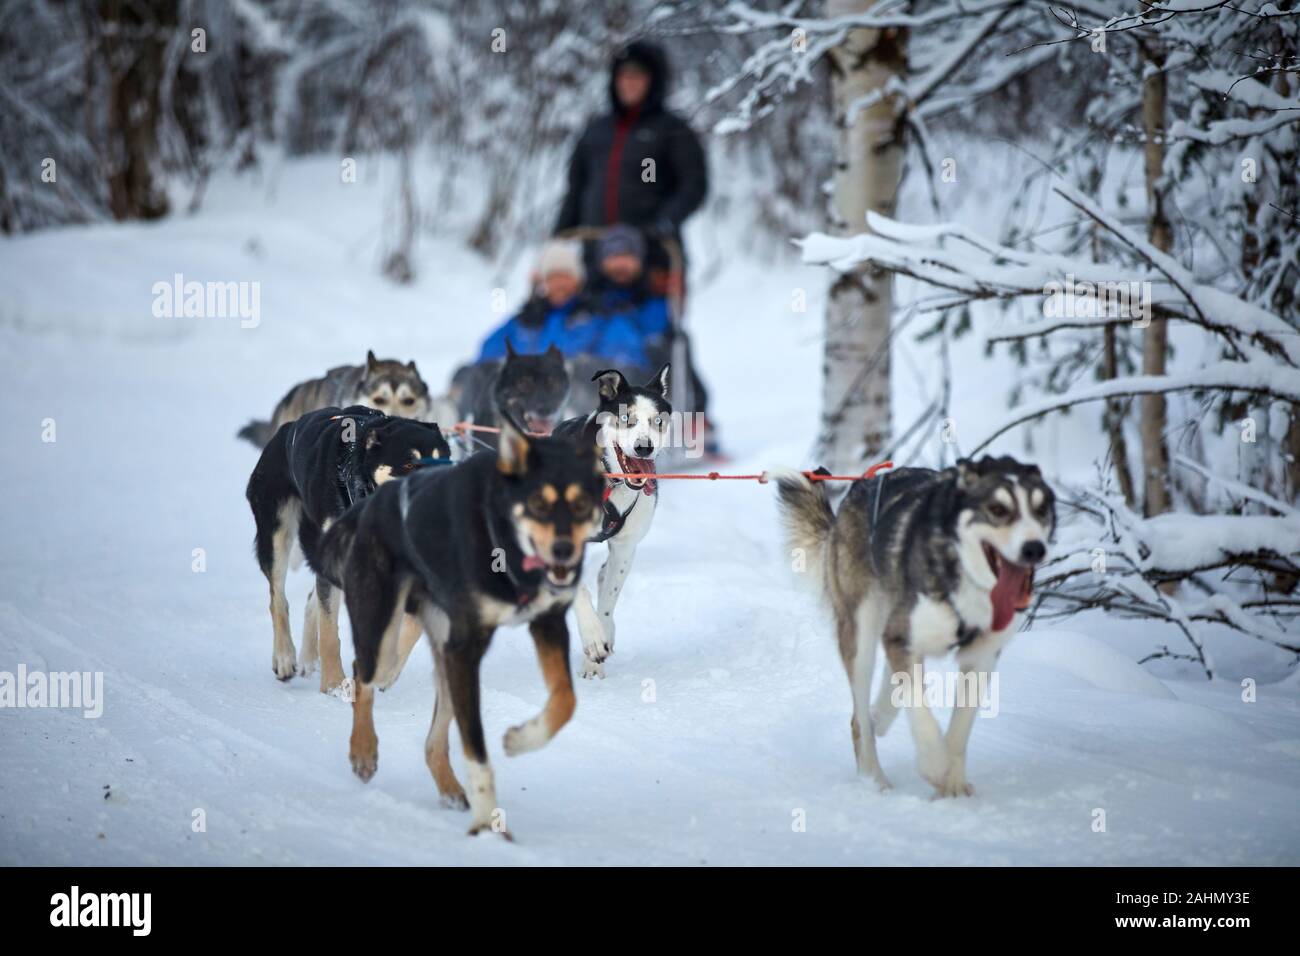 Finnish Rovaniemi a city in Finland and the region of Lapland Santa Park husky dog ride Stock Photo